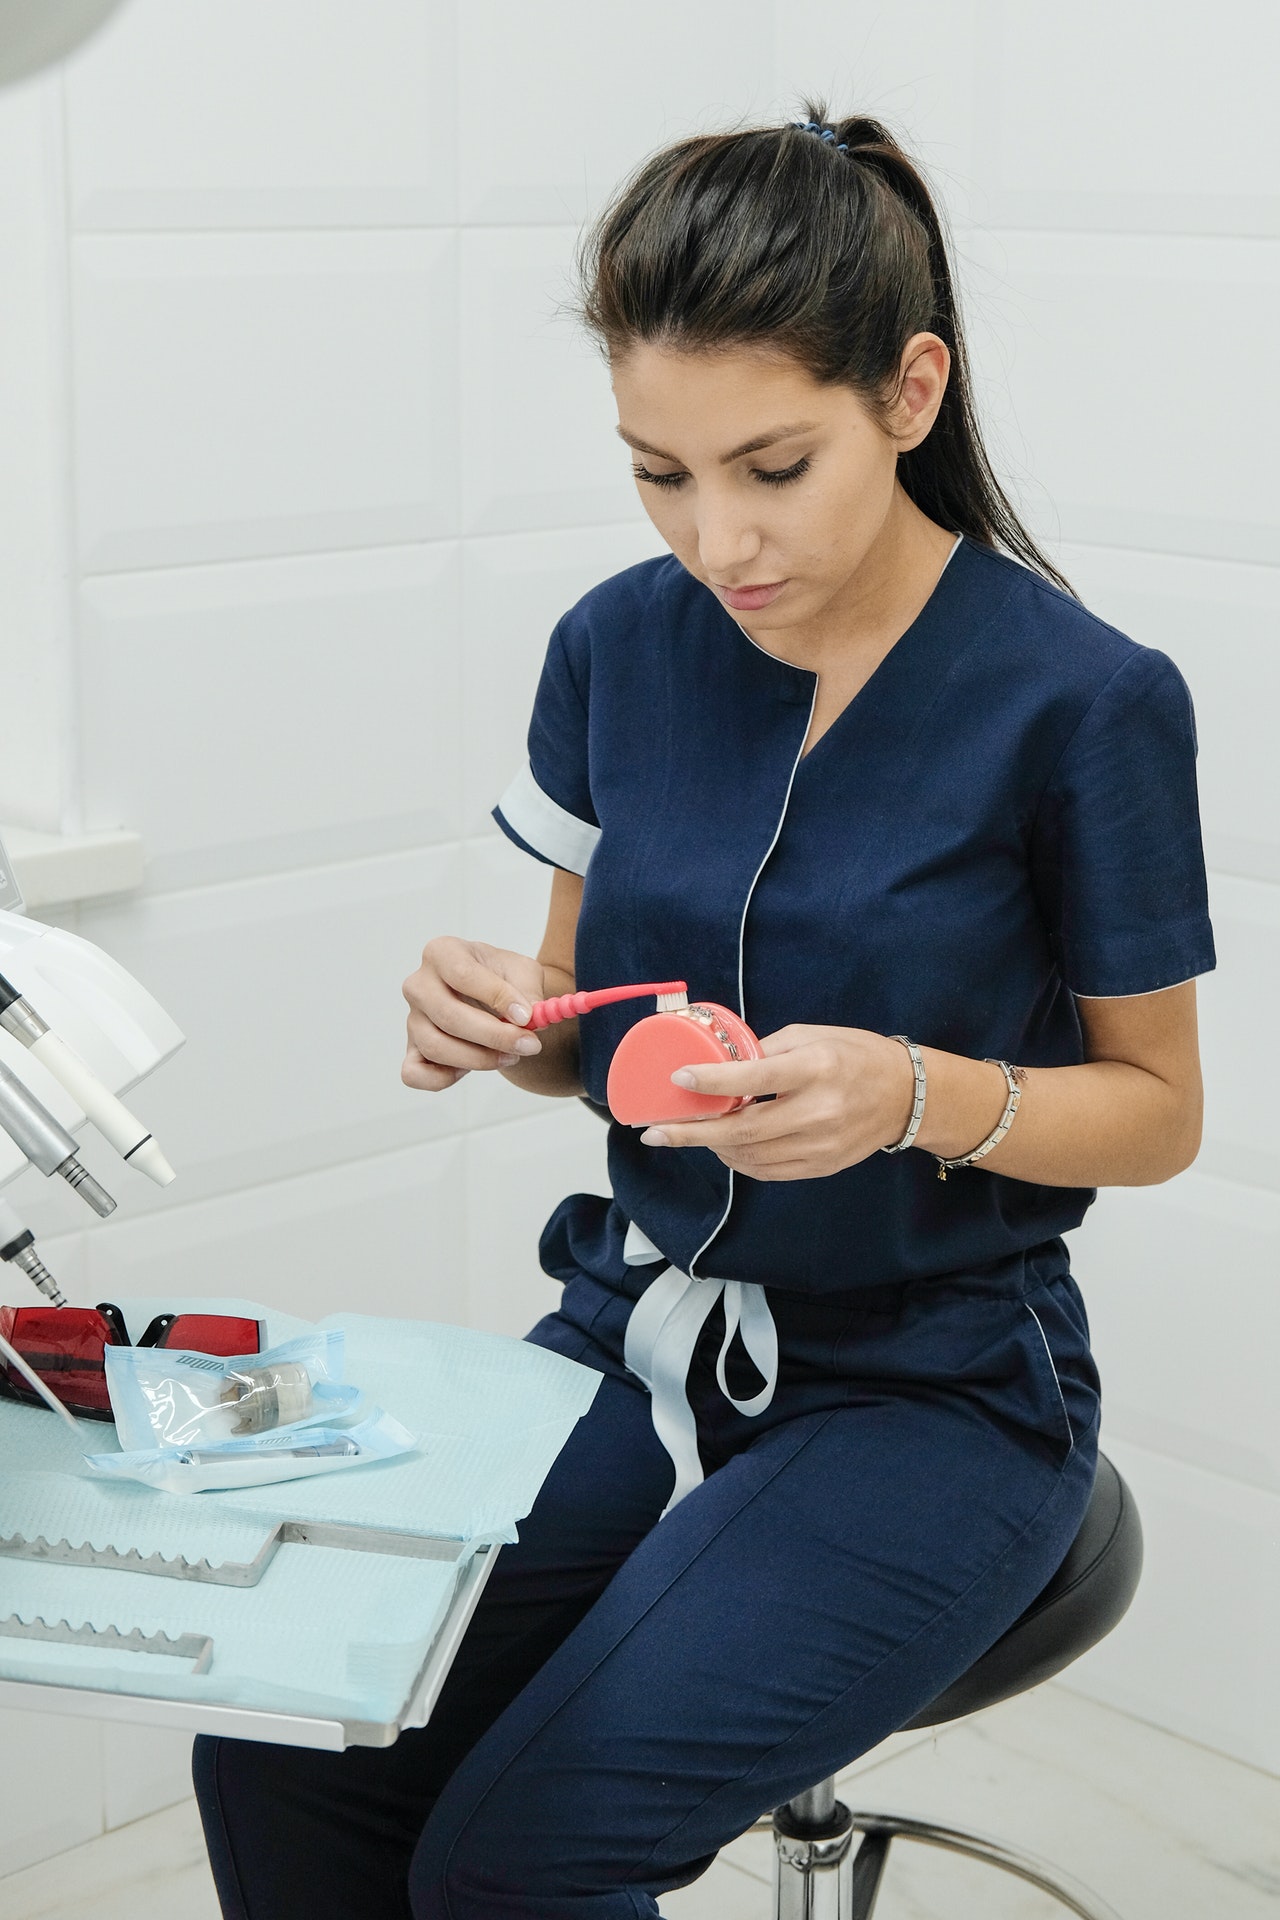 Dental Health Restoration with Dental Implants in Waterford, MI